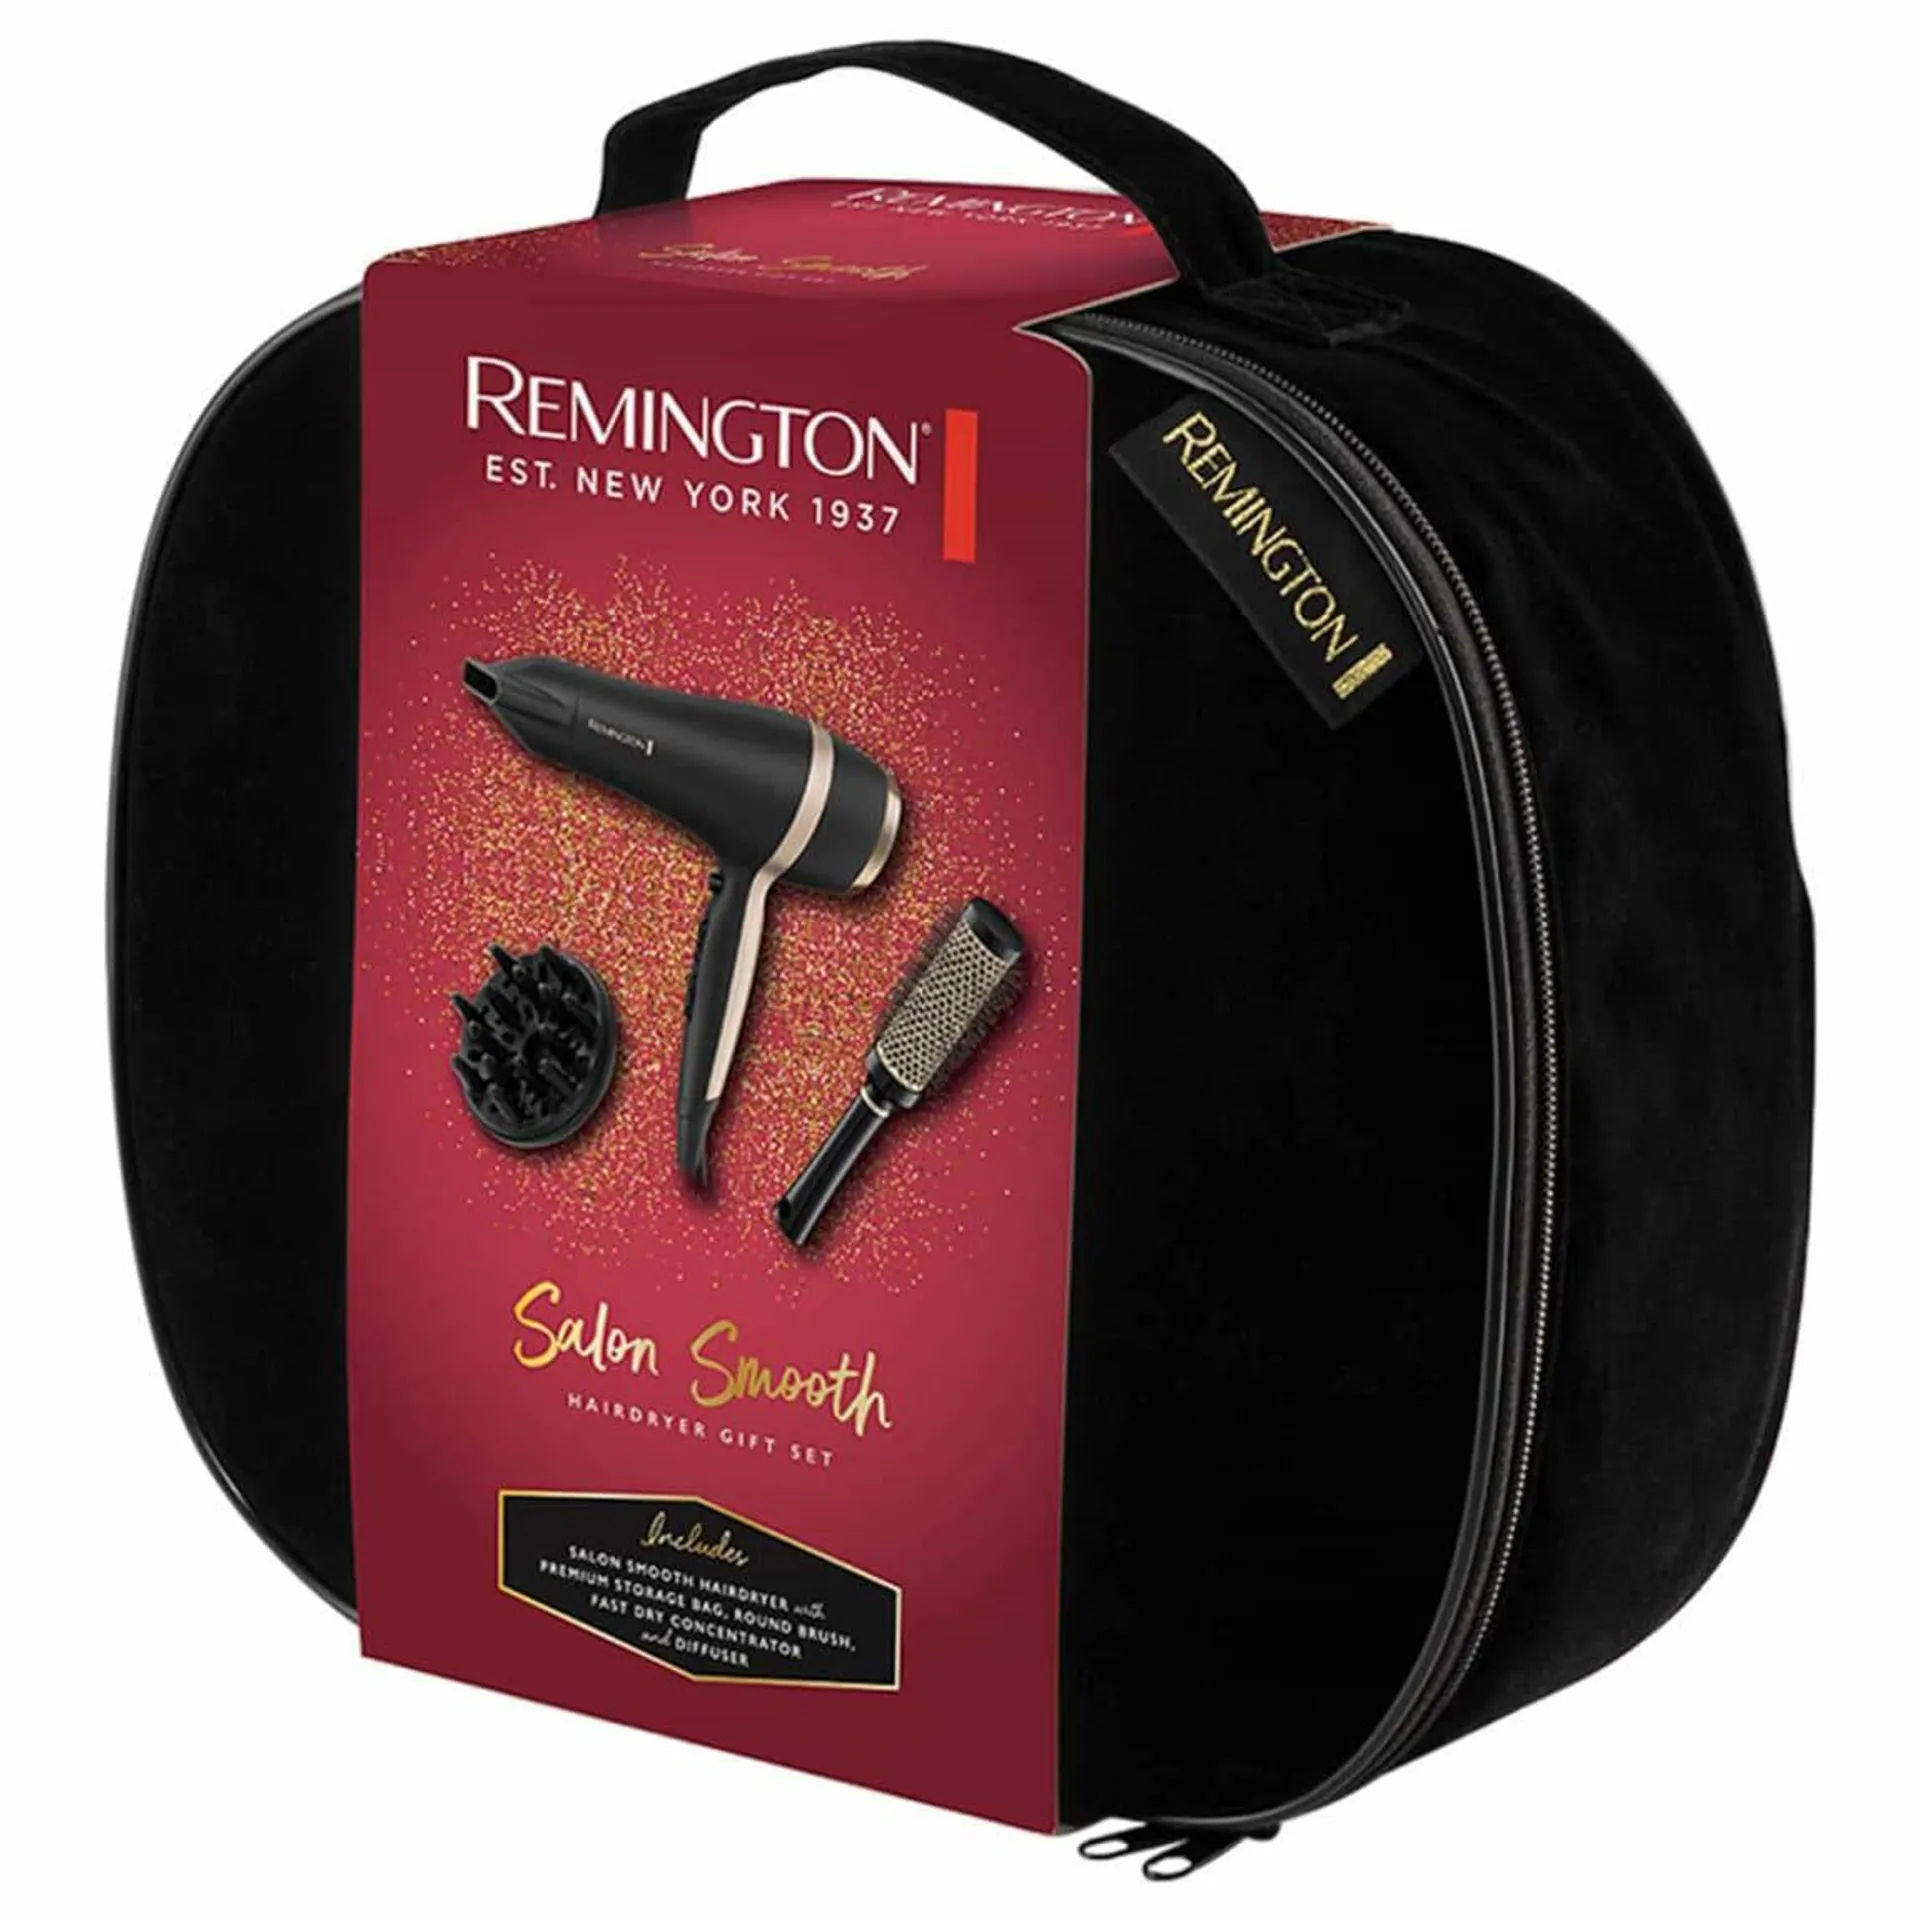 Remington Salon Smooth Hair Dryer Gift Set